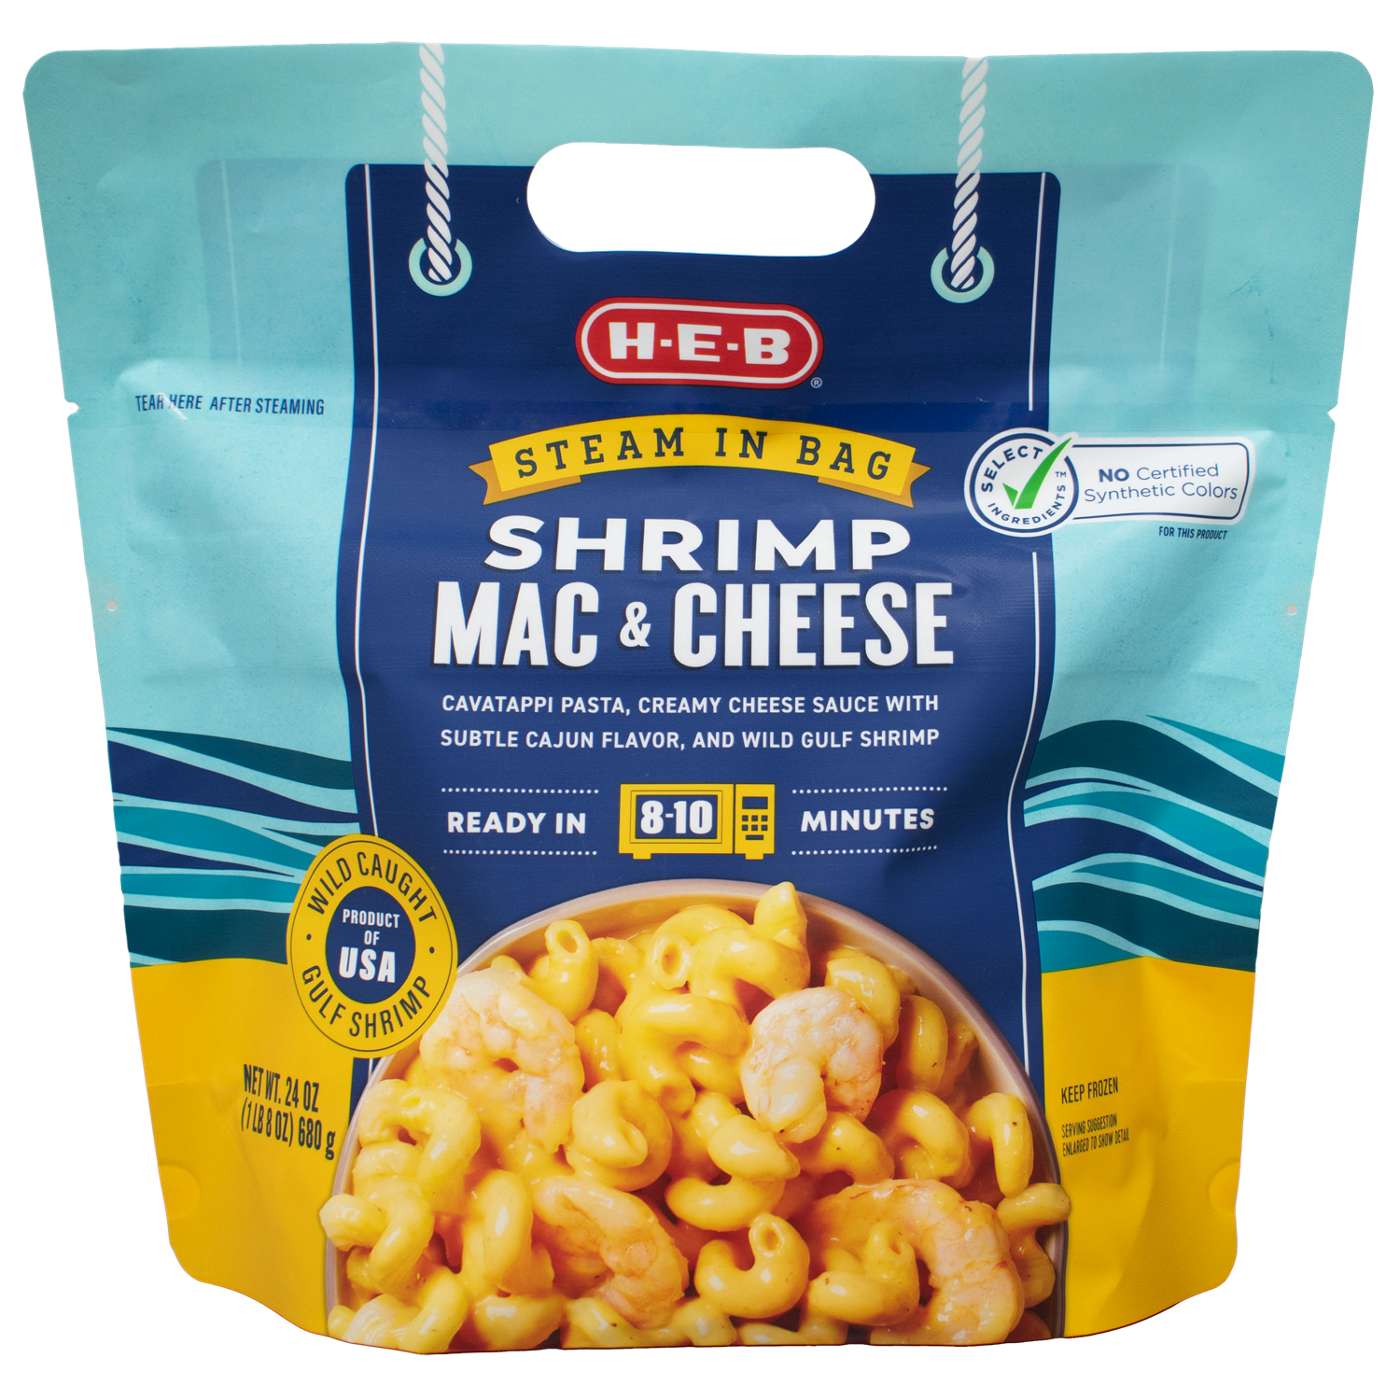 H-E-B Frozen Steamable Shrimp Mac & Cheese; image 1 of 2